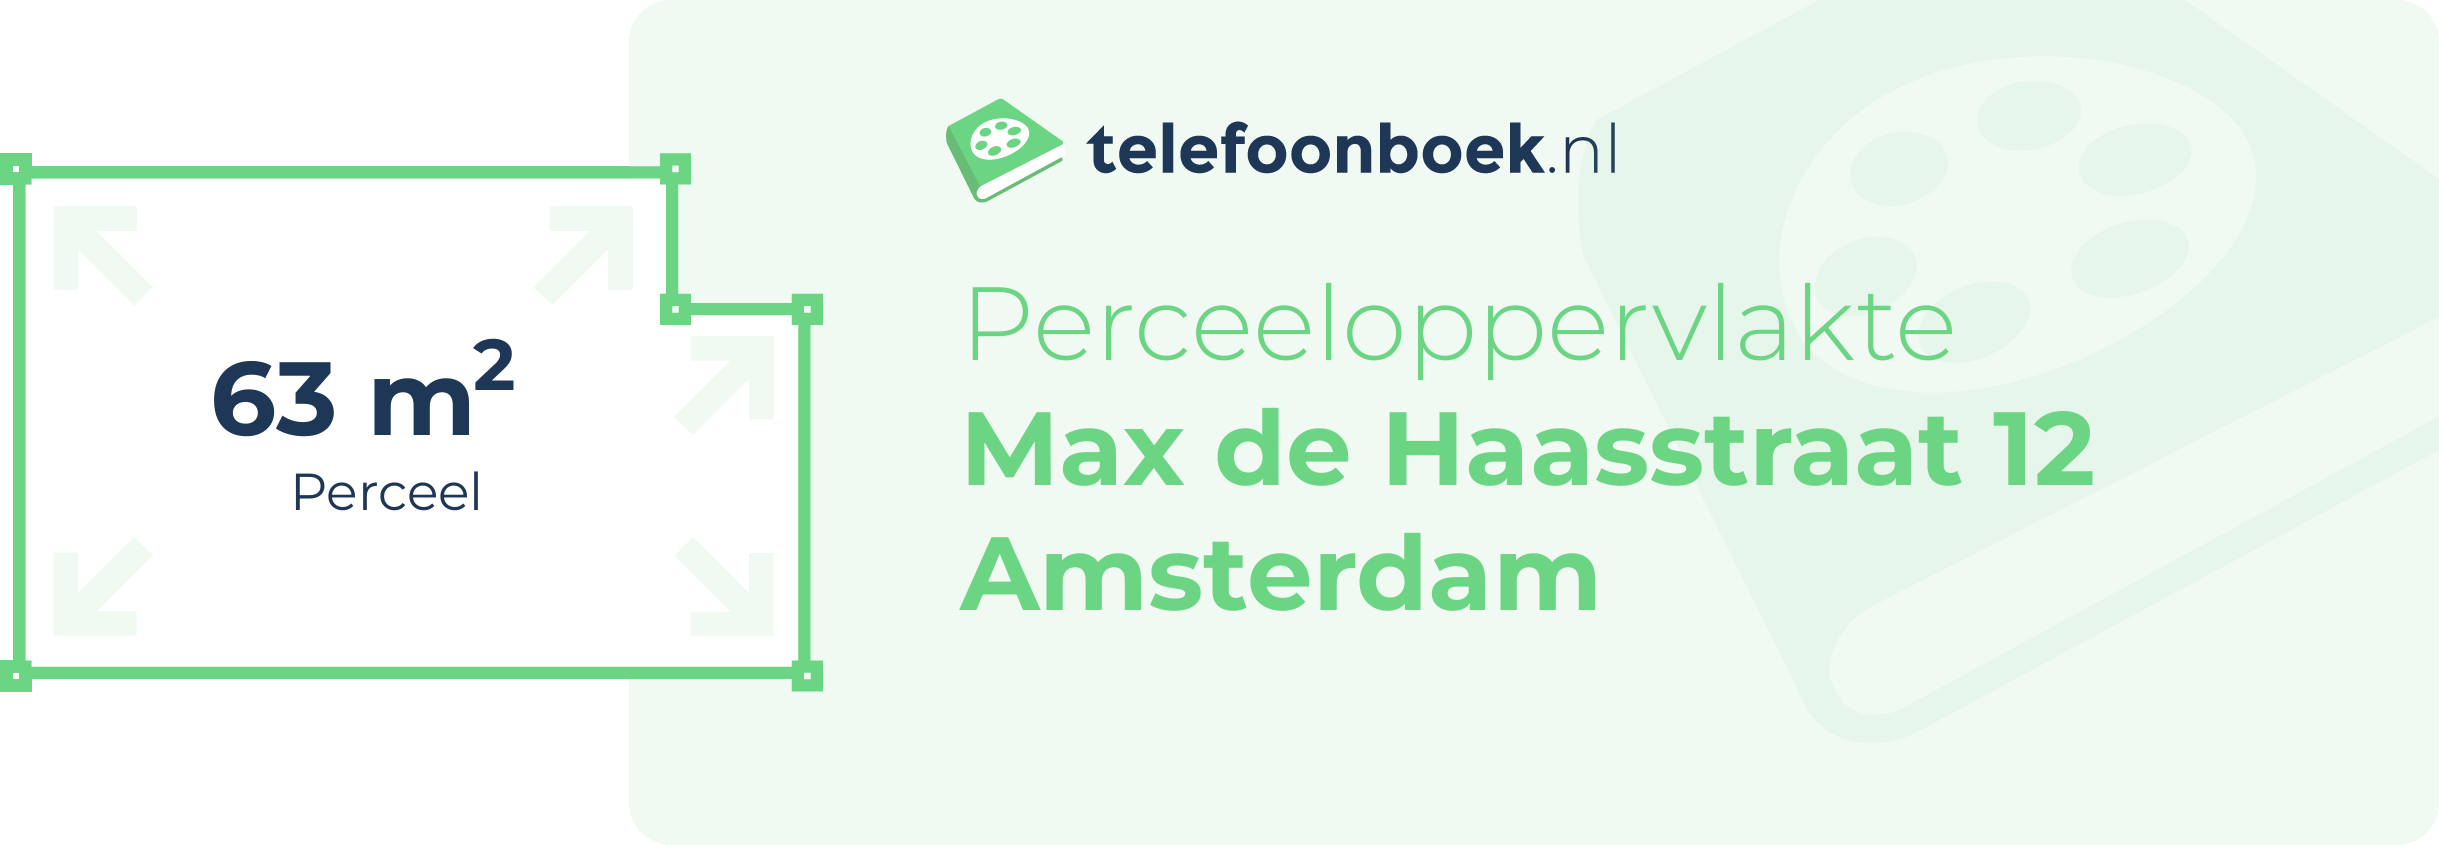 Perceeloppervlakte Max De Haasstraat 12 Amsterdam